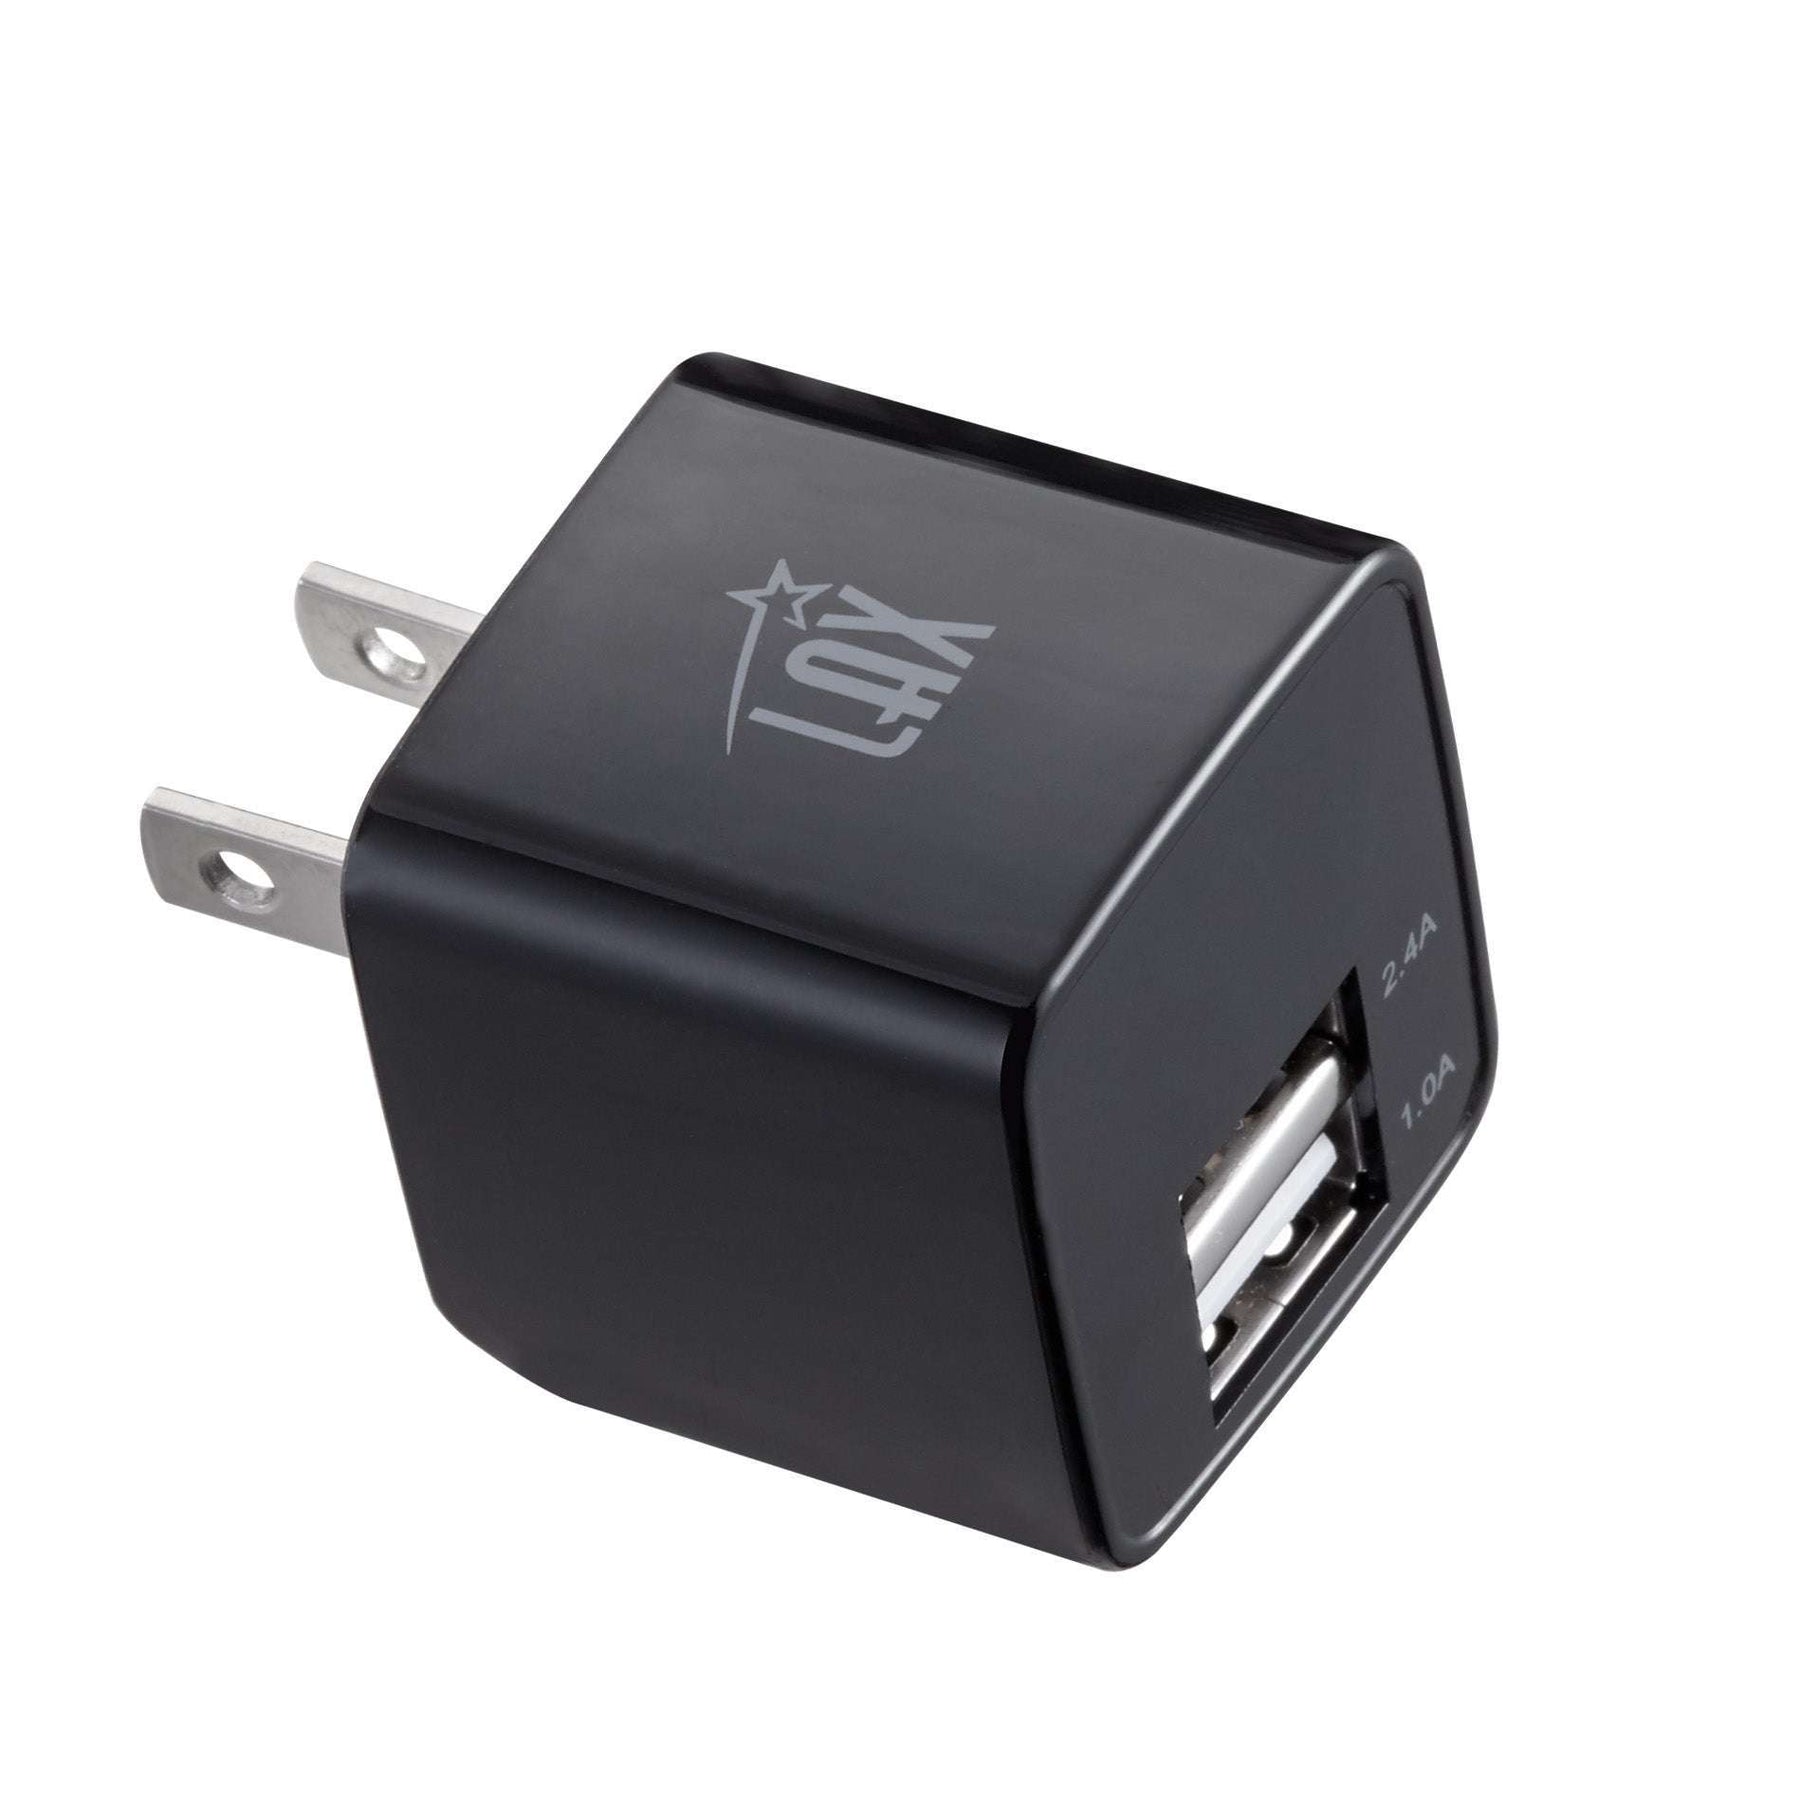 Chargeur Voiture Mini Rapide USB-C Samsung – Urban Mobile SPRL